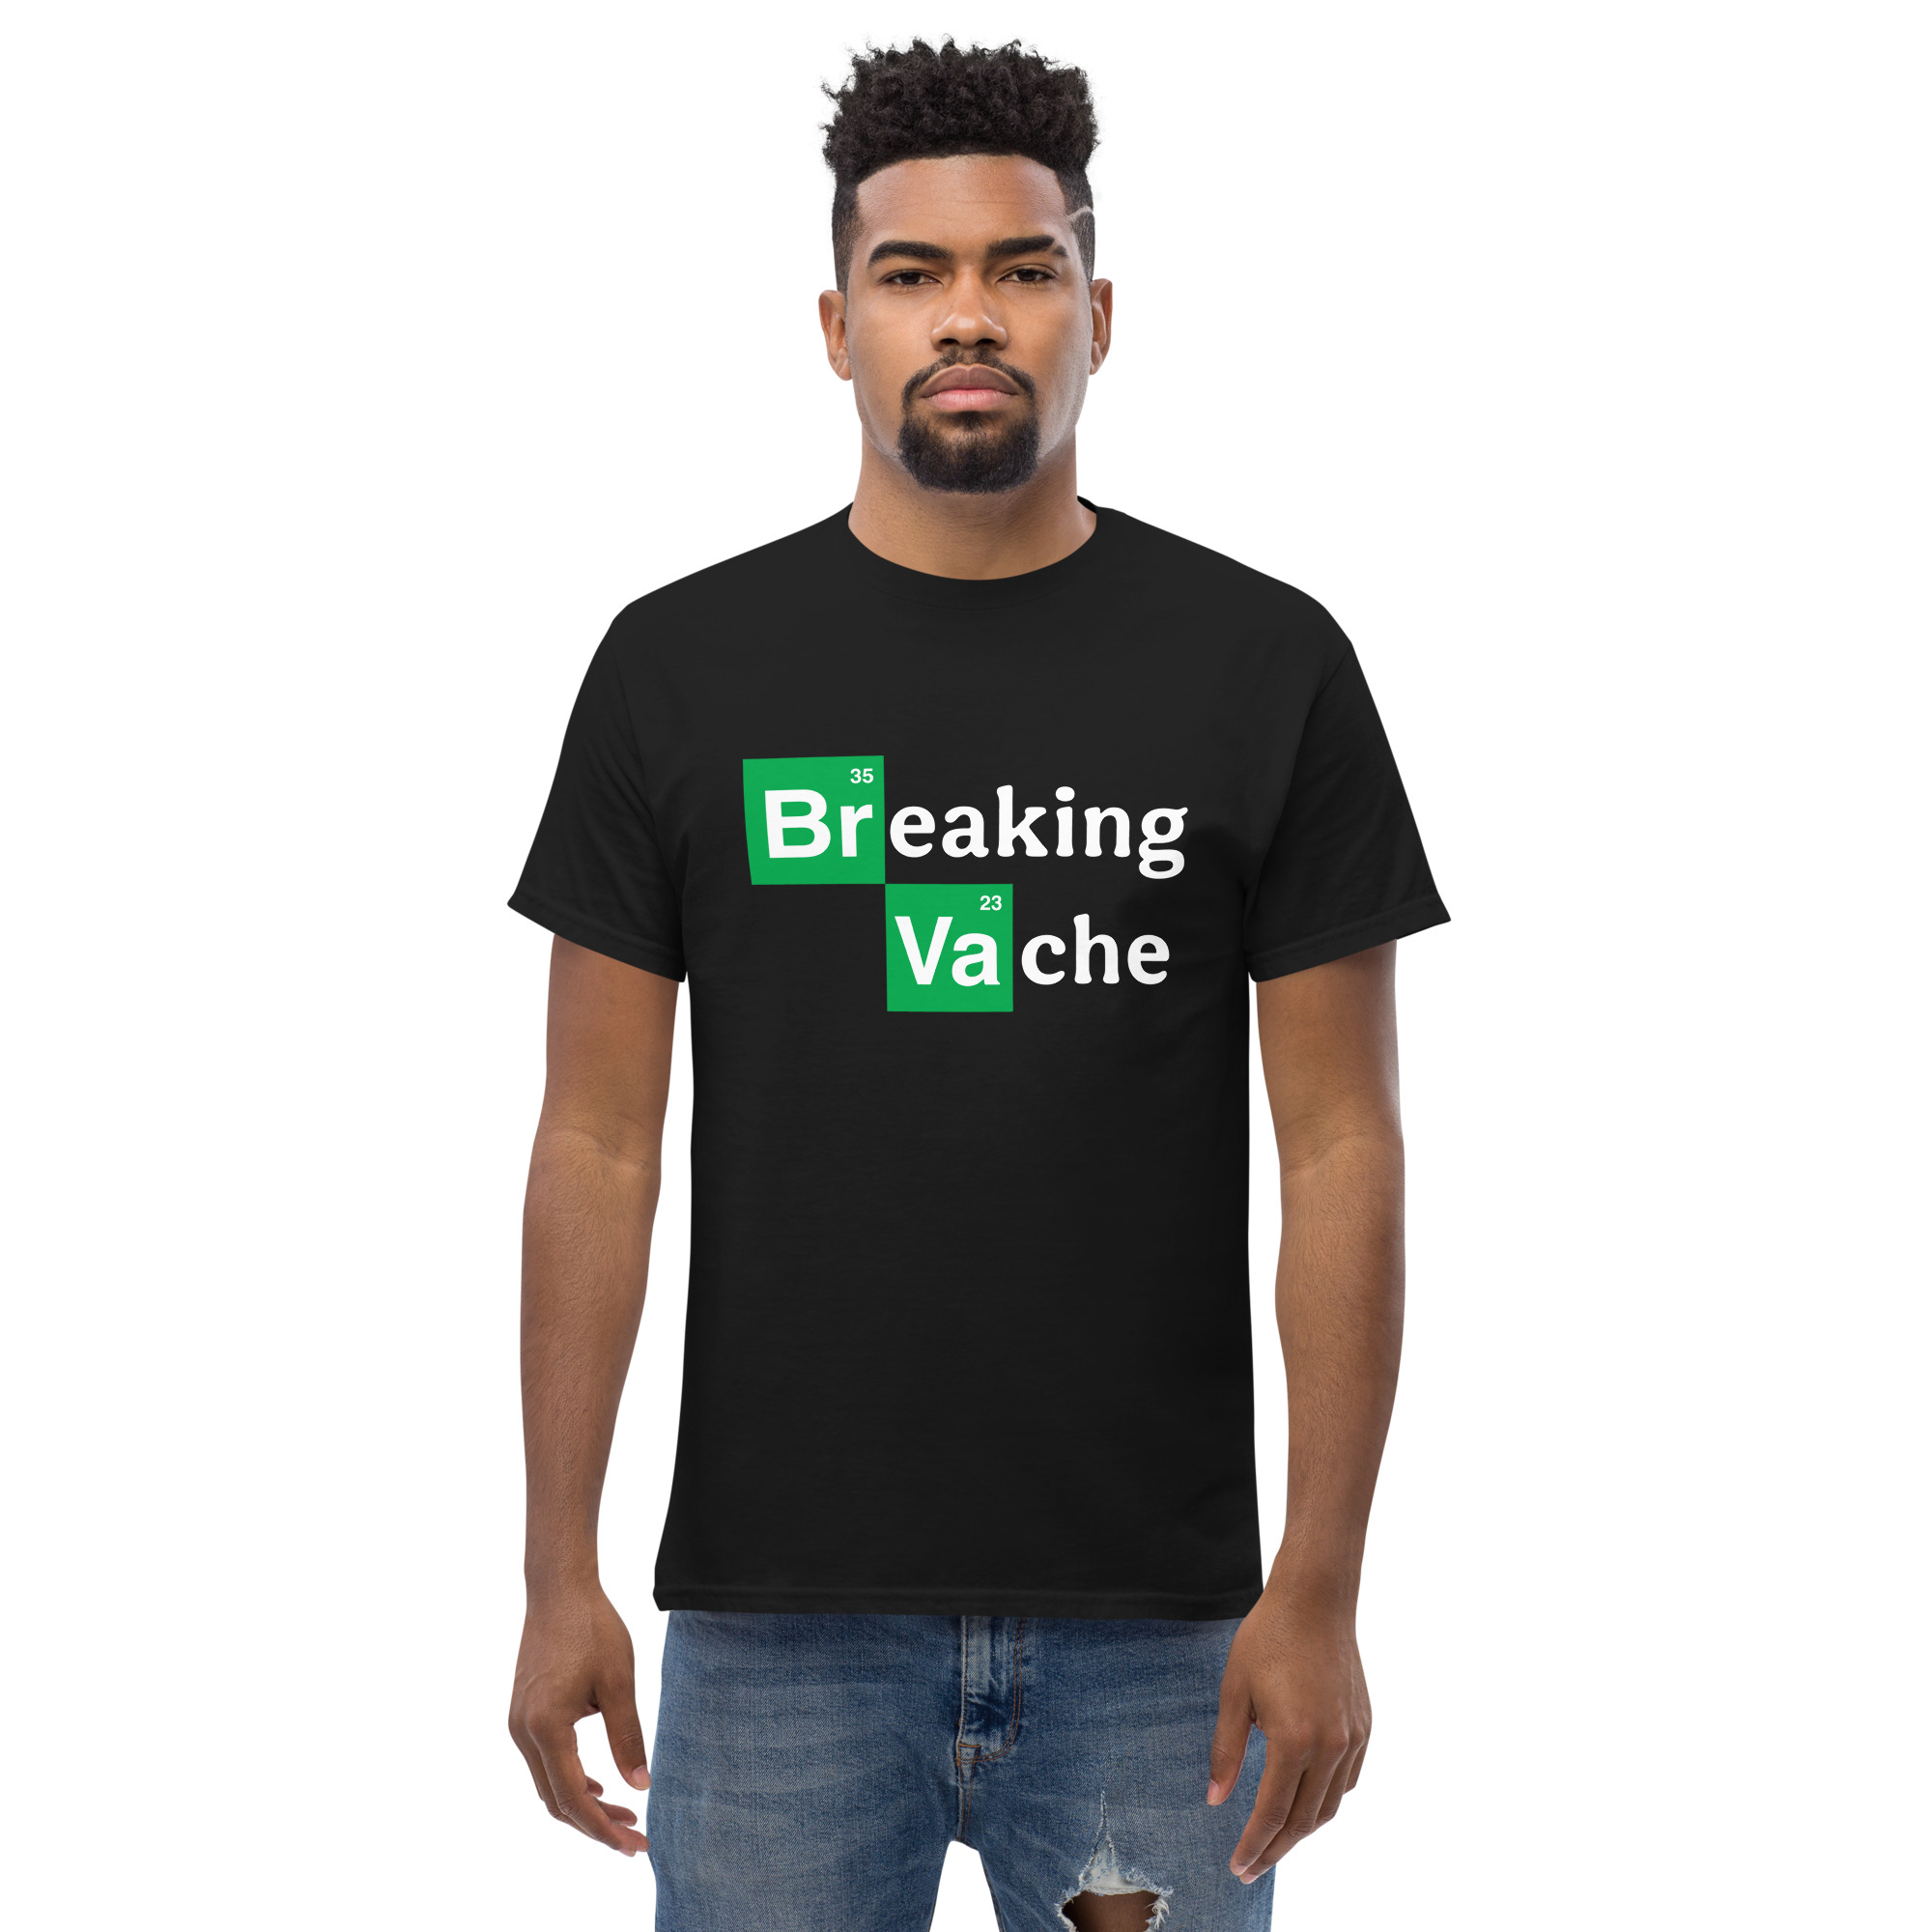 T-shirt – Les Vaudois – Breaking Vache Men's Clothing Wearyt